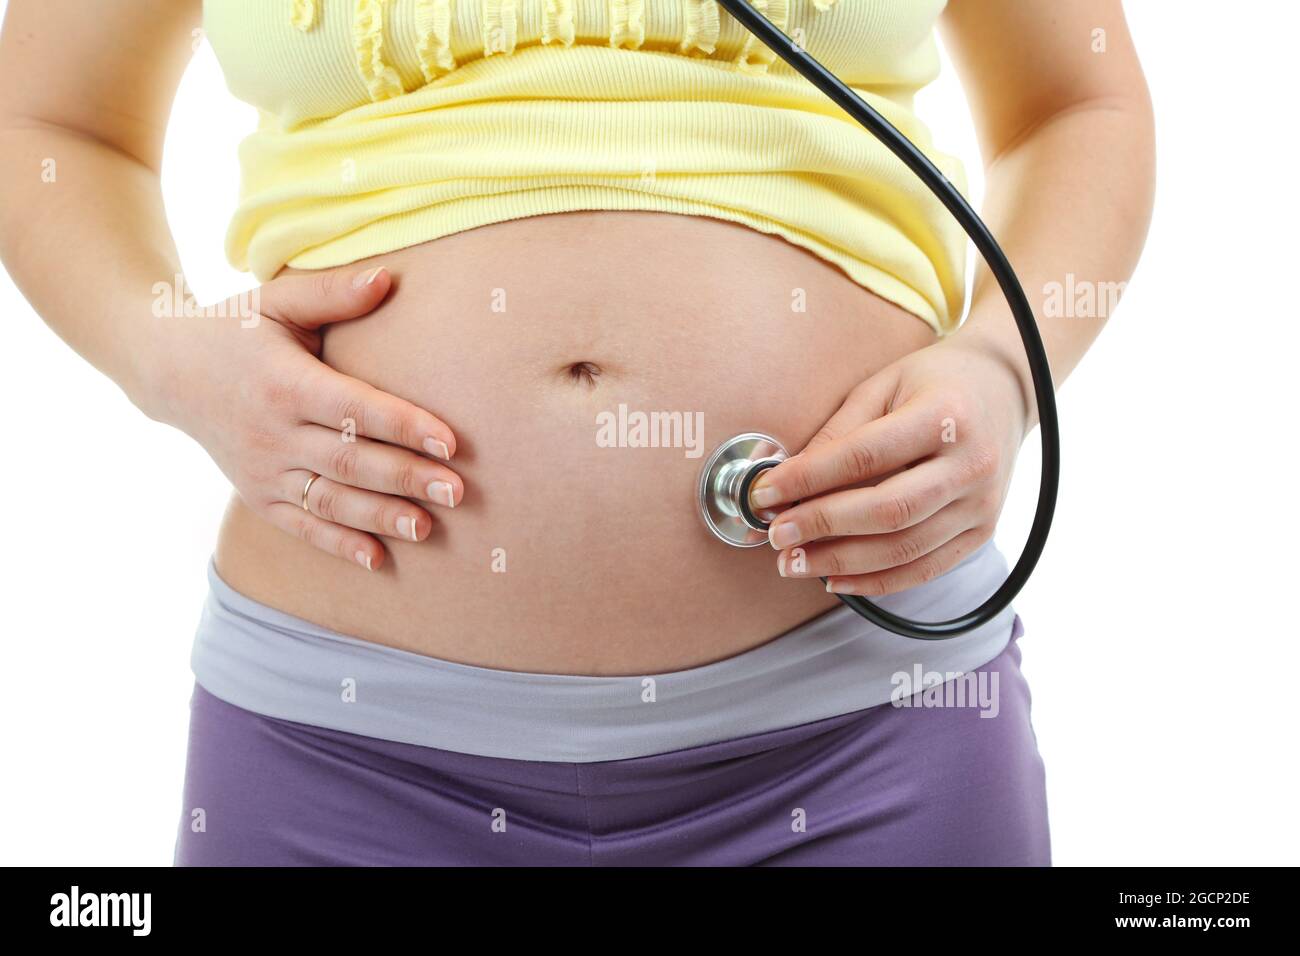 Schwangere Frau mit Stethoskop hören baby Nahaufnahme Stockfotografie -  Alamy